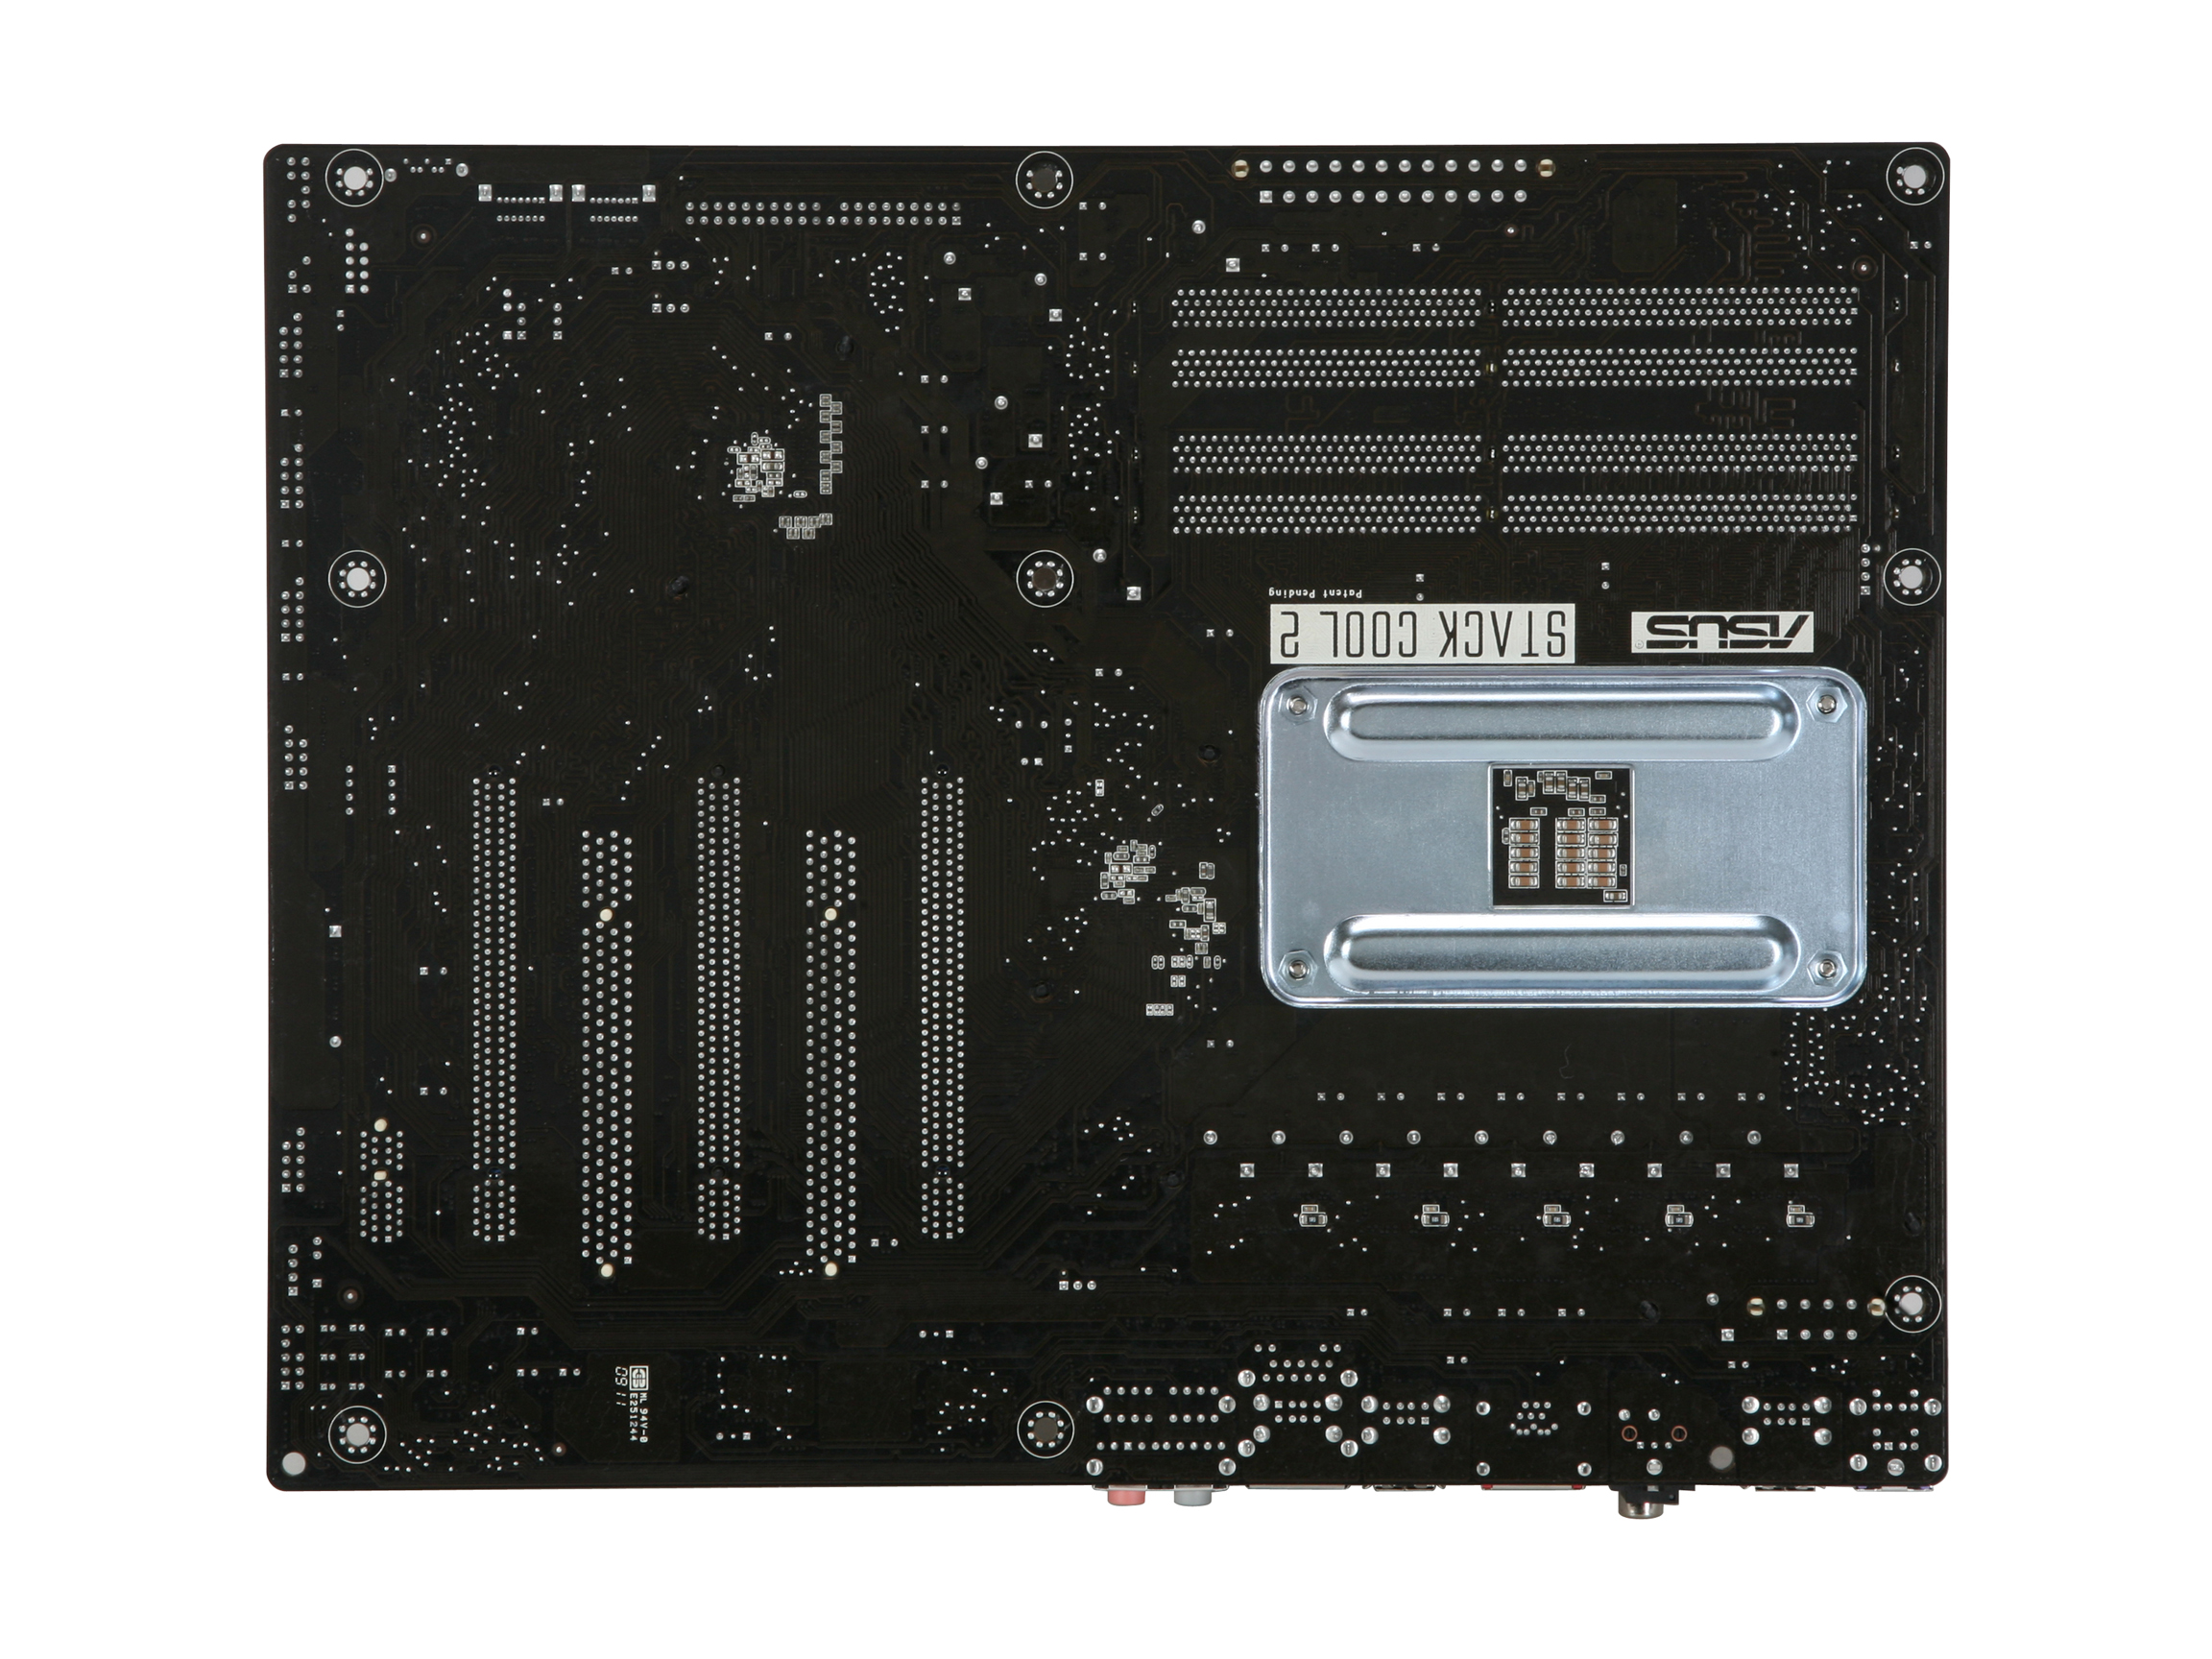 ASUS M4N82 Deluxe AM3/AM2+/AM2 NVIDIA nForce 980a SLI AMD Motherboard